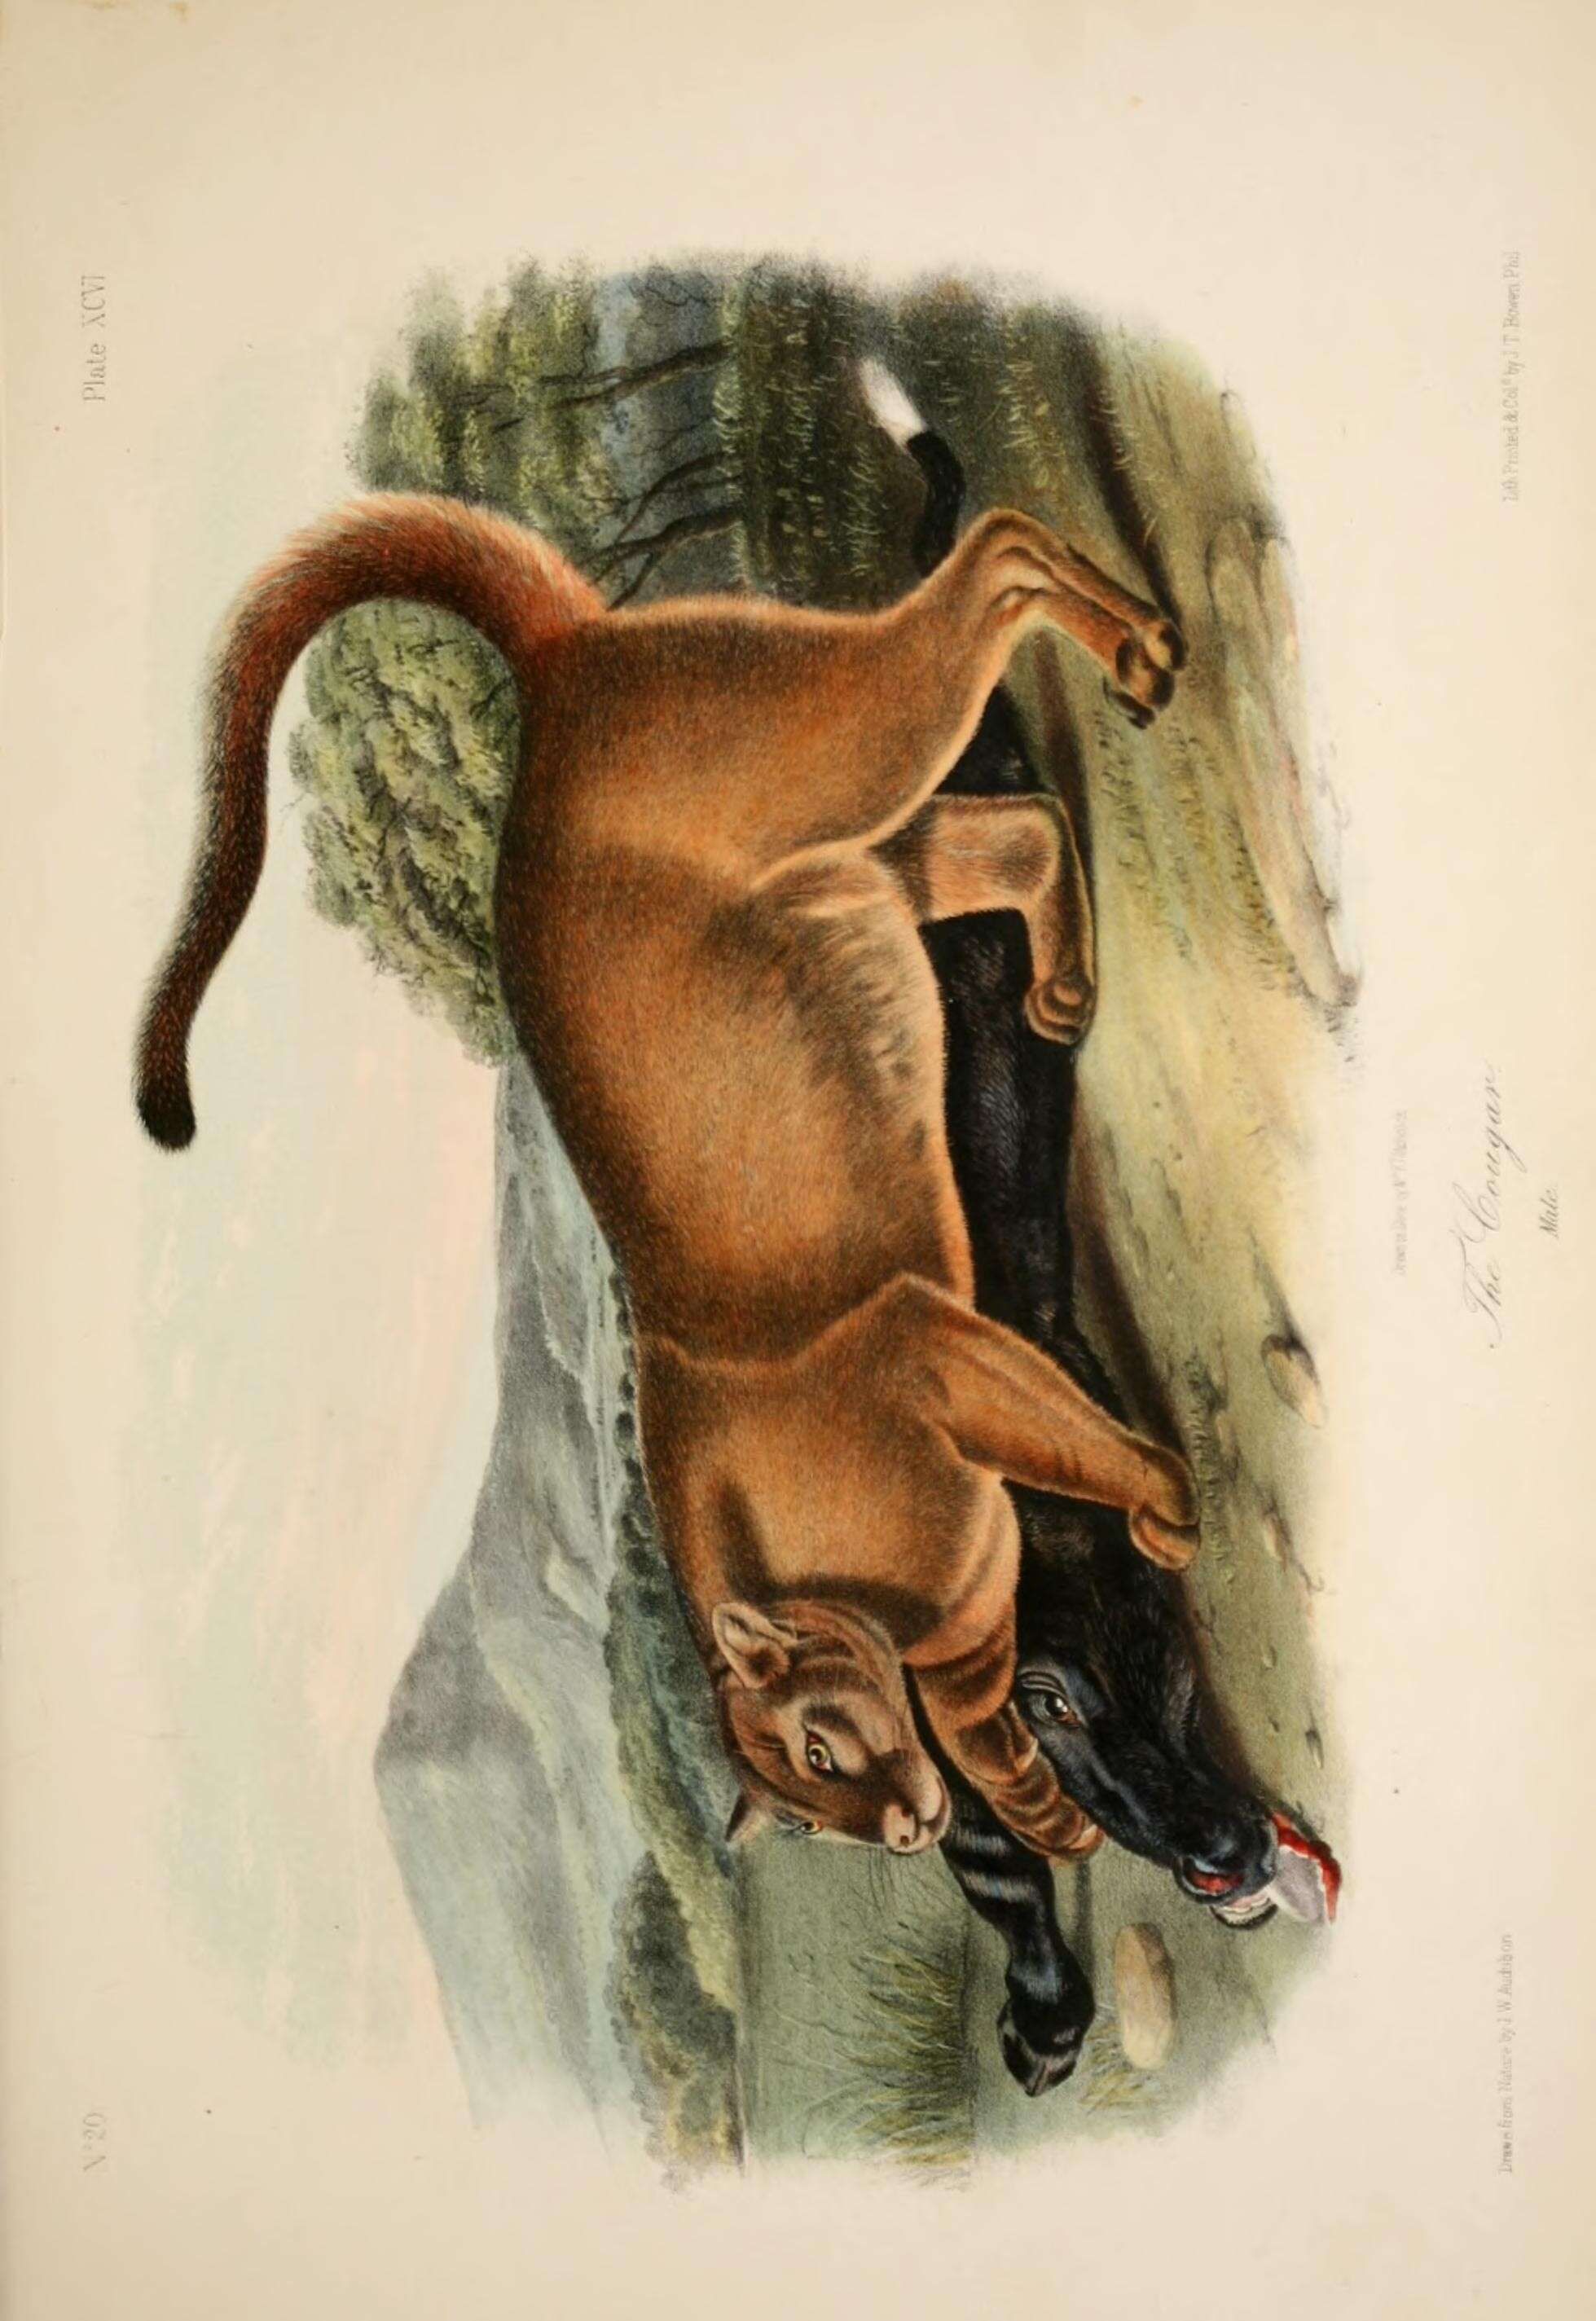 Image of Florida panther